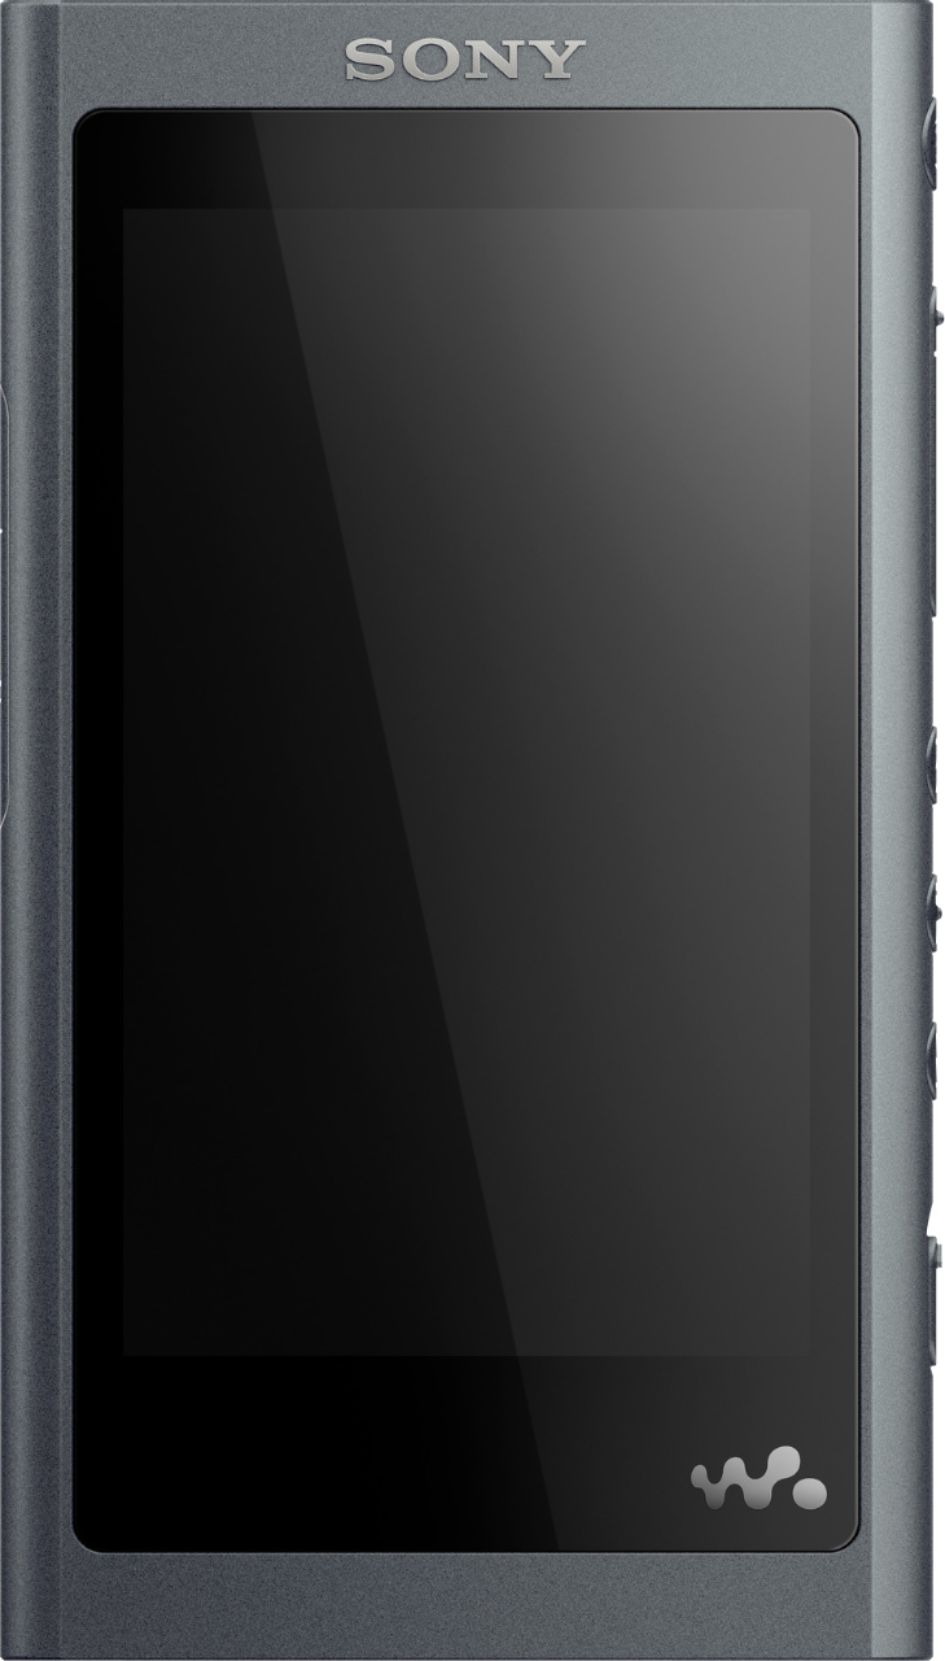 Sony Walkman NW-A55 Hi-Res 16GB* MP3 Player Black  - Best Buy